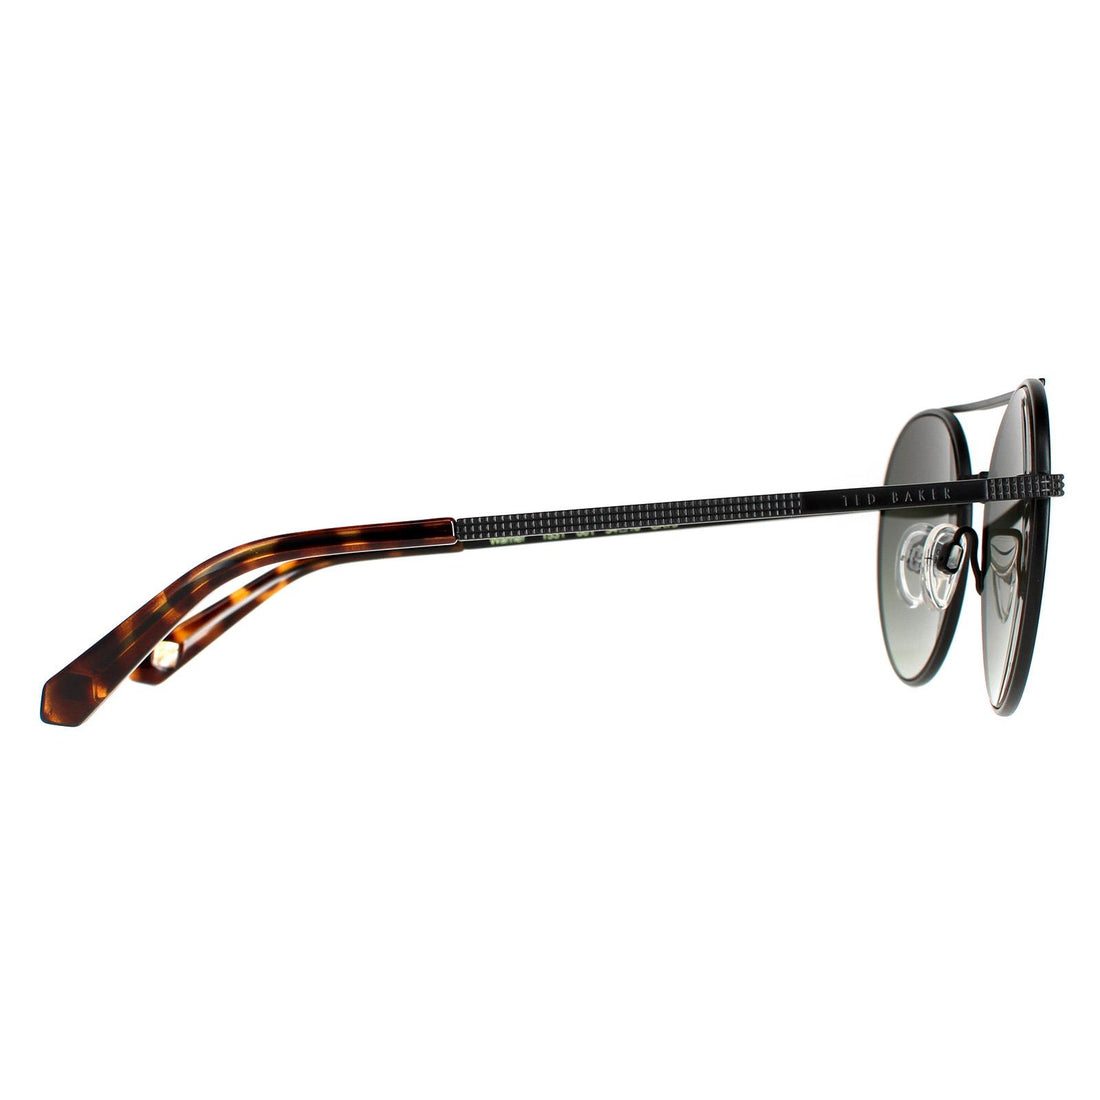 Ted Baker Sunglasses TB1531 Warner 001 Black Grey